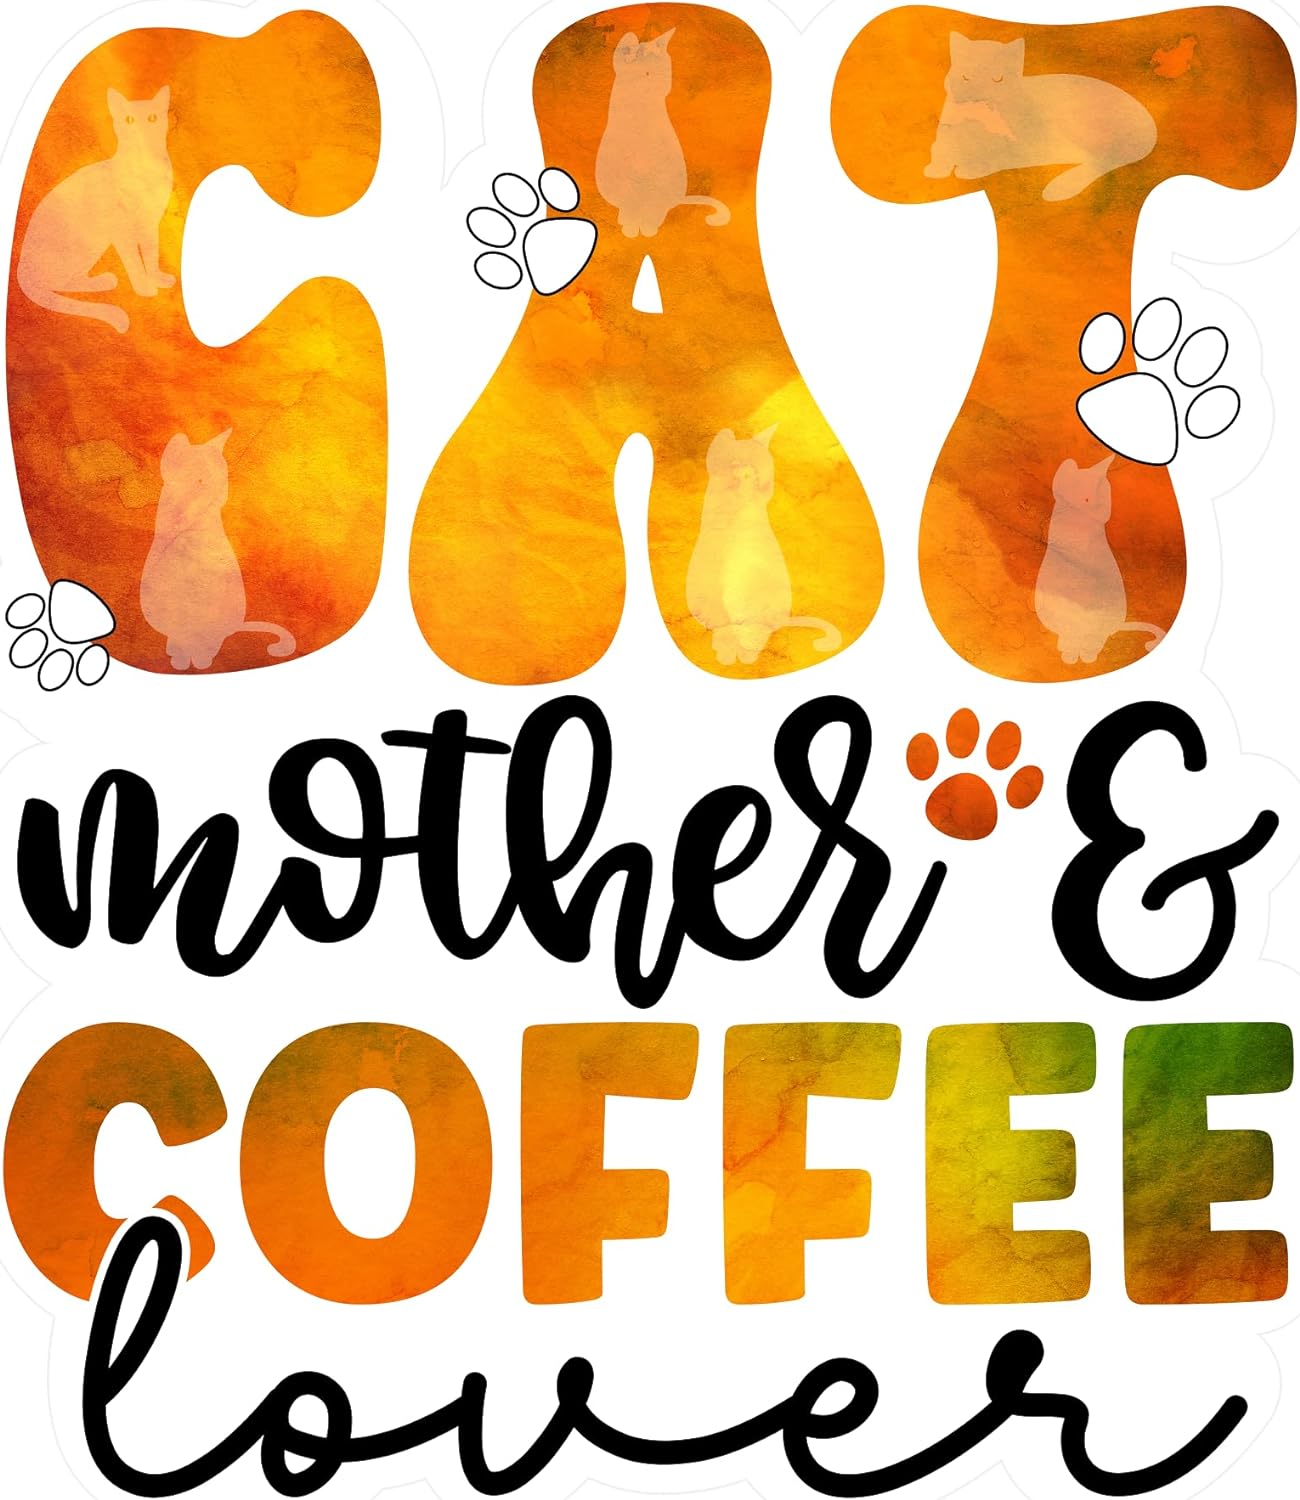 Inspirational Quote "Cat Mother & Coffee Lover" Motivational Sticker Vinyl Decal Motivation Stickers- 5" Vinyl Sticker Waterproof